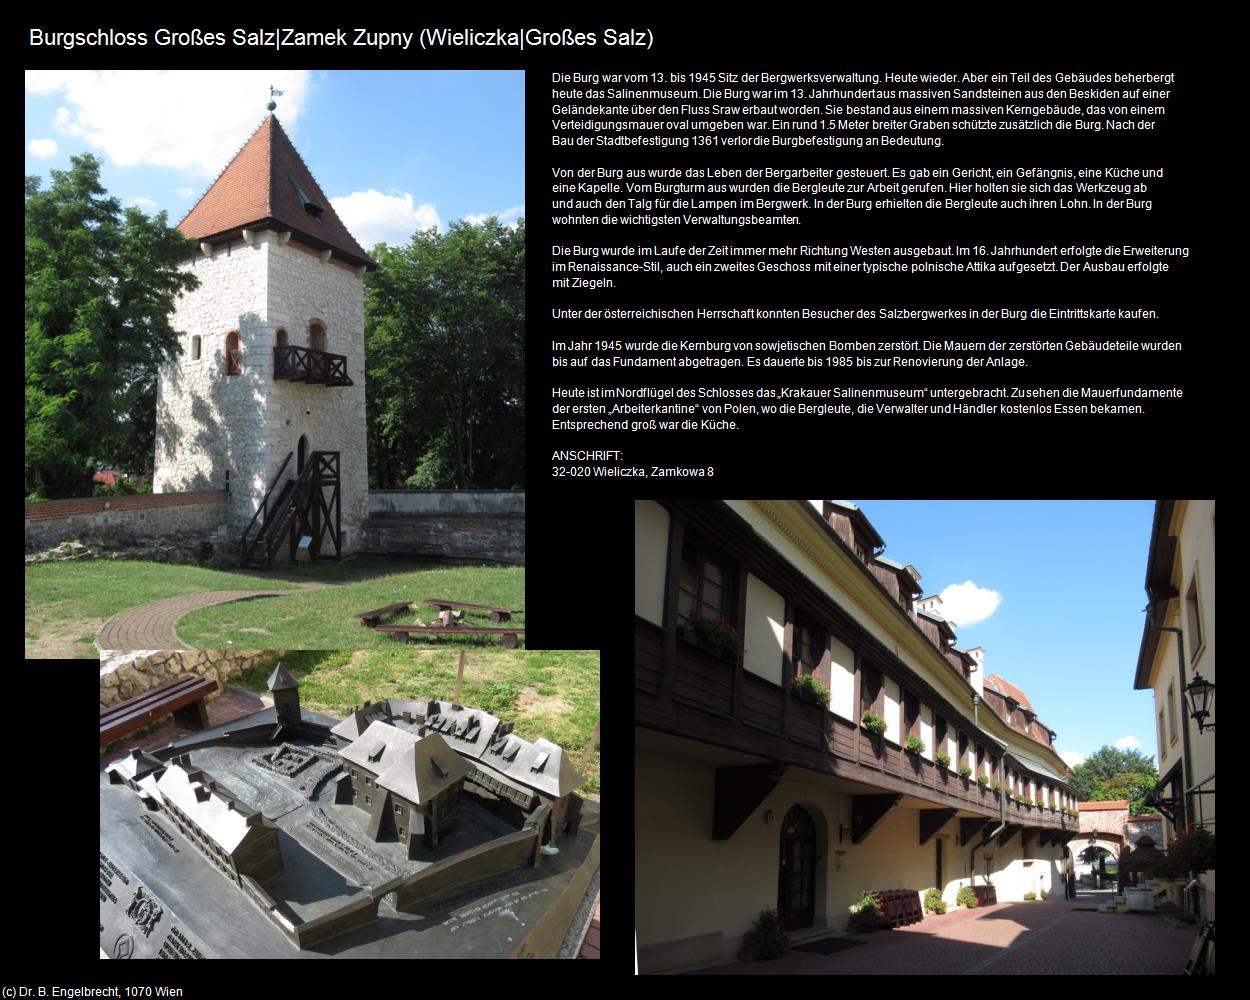 Burgschloss mit Salinenmuseum  (Wieliczka|Großes Salz) in POLEN-Galizien